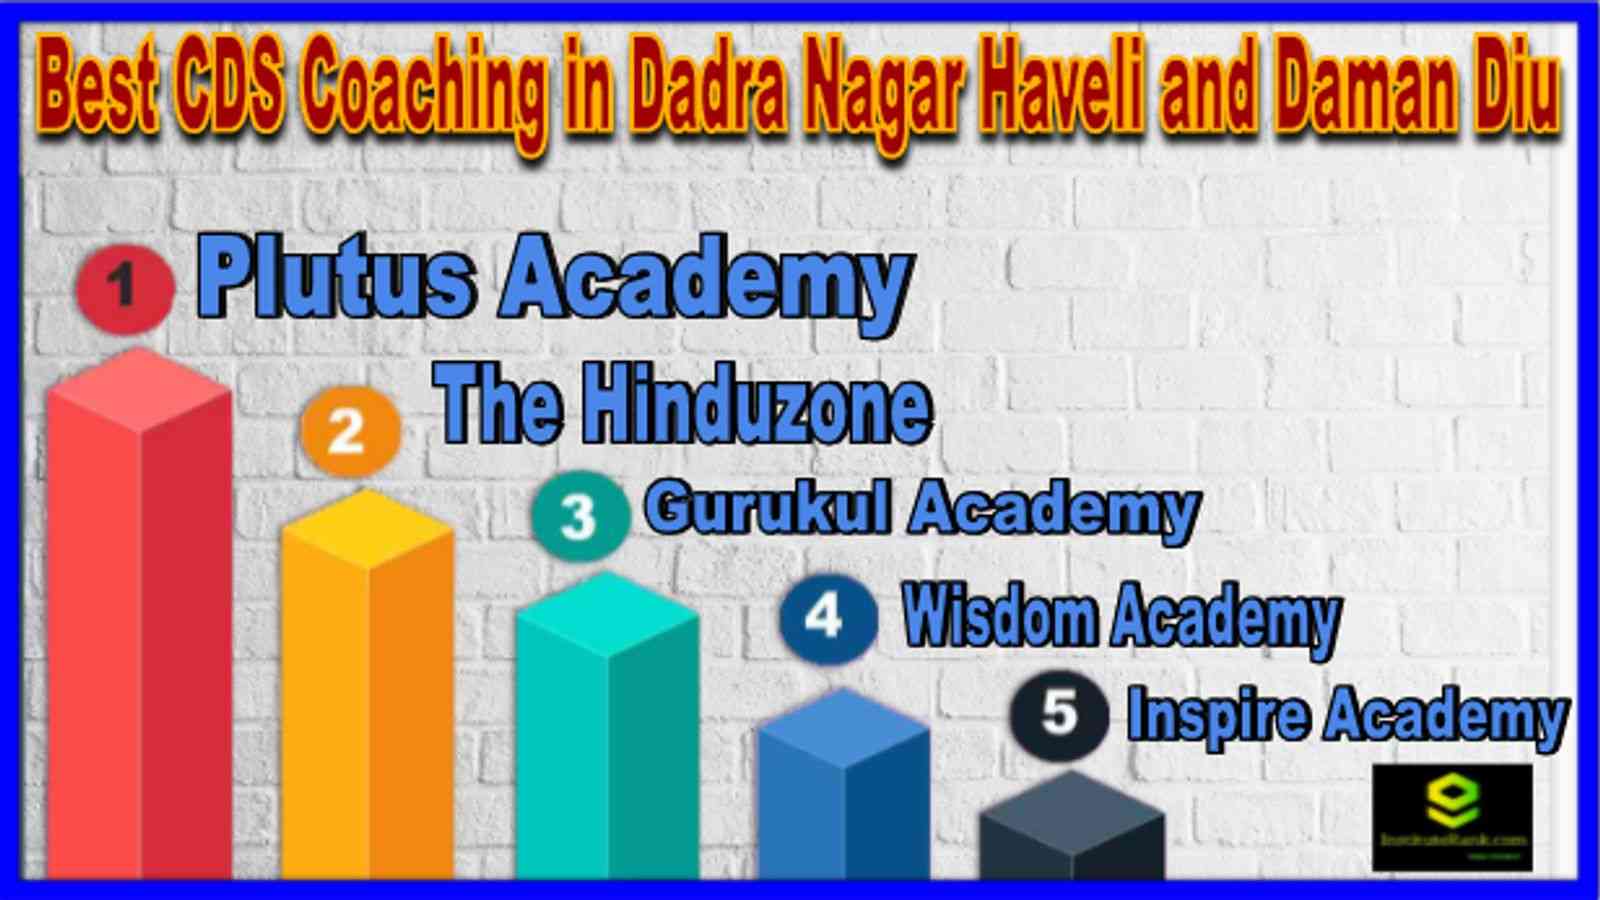 Best CDS Coaching in Dadar nagar haveli and daman